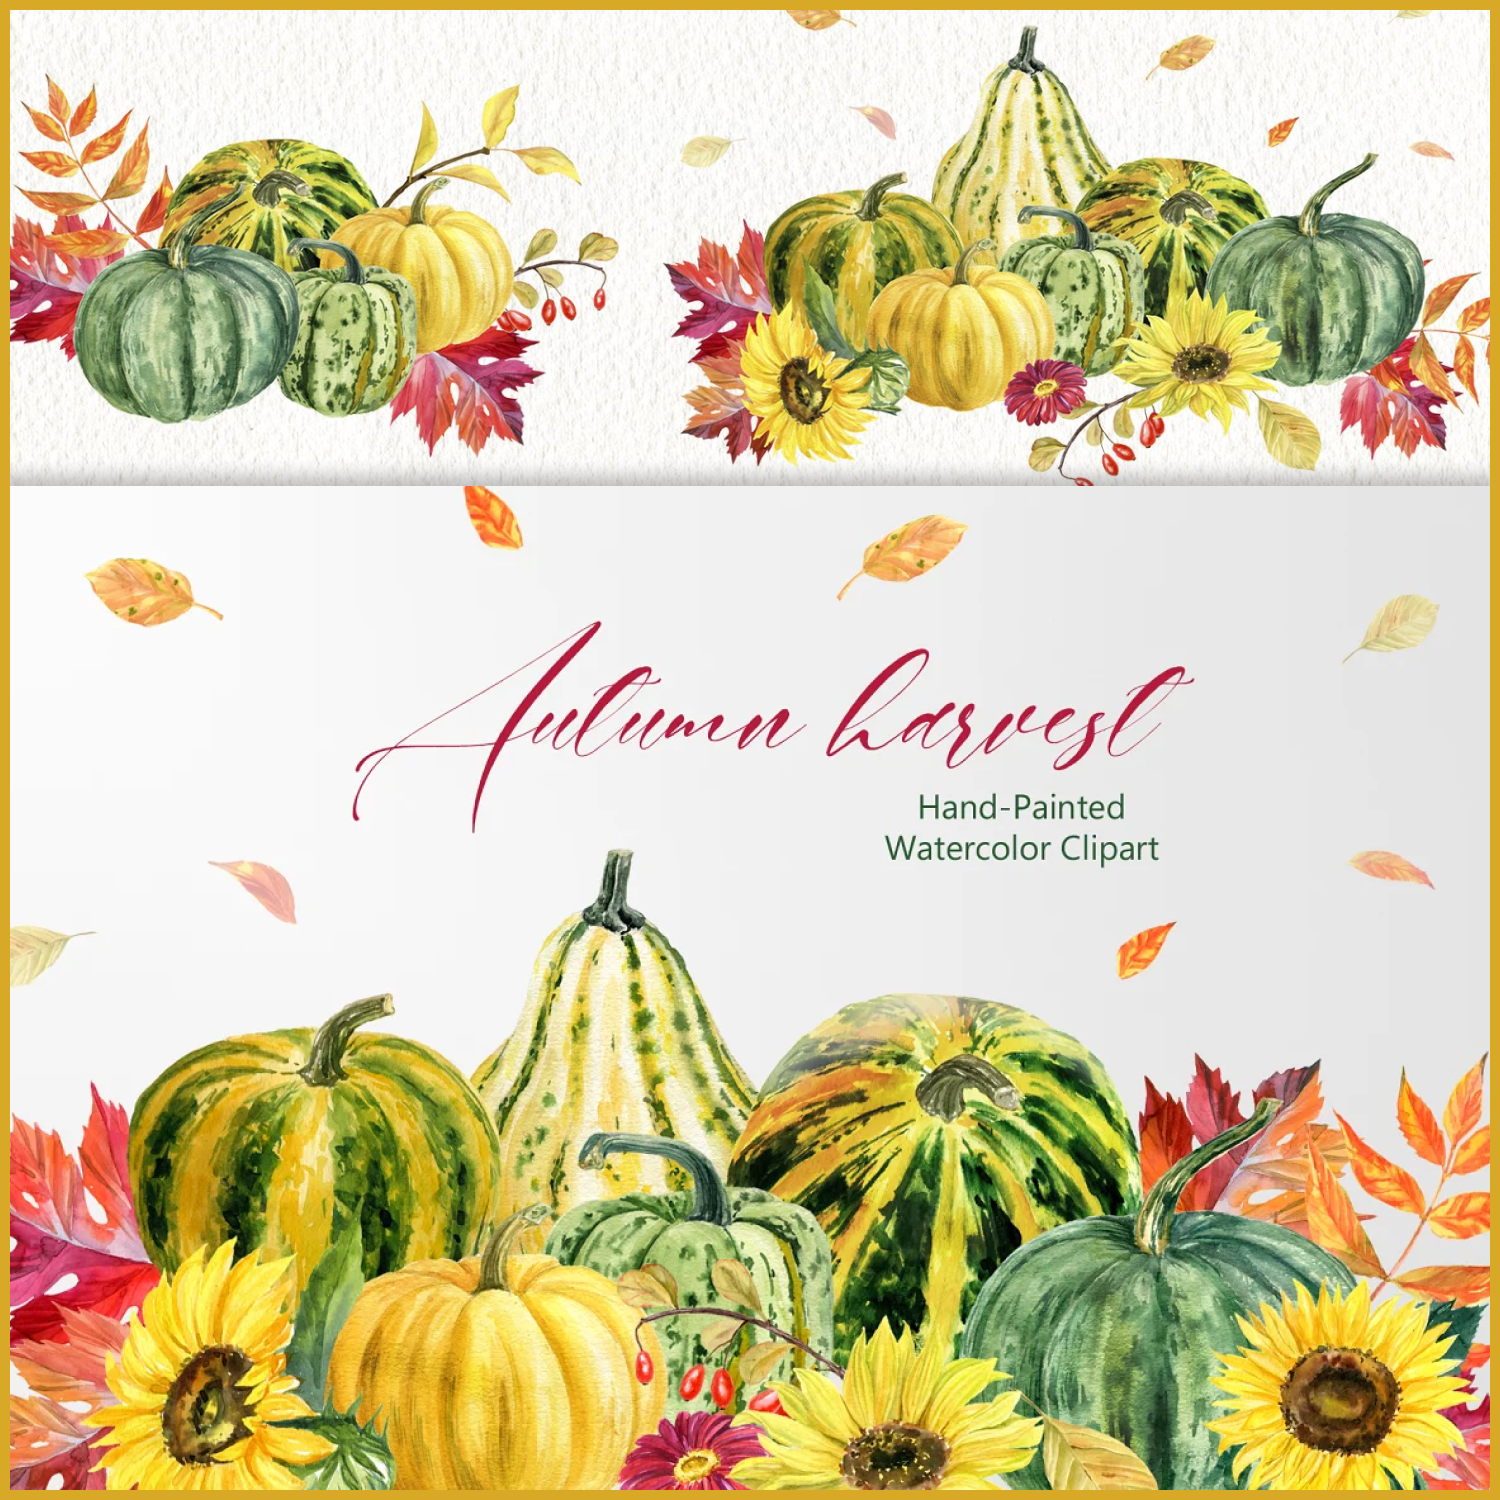 Prints of autumn harvest.